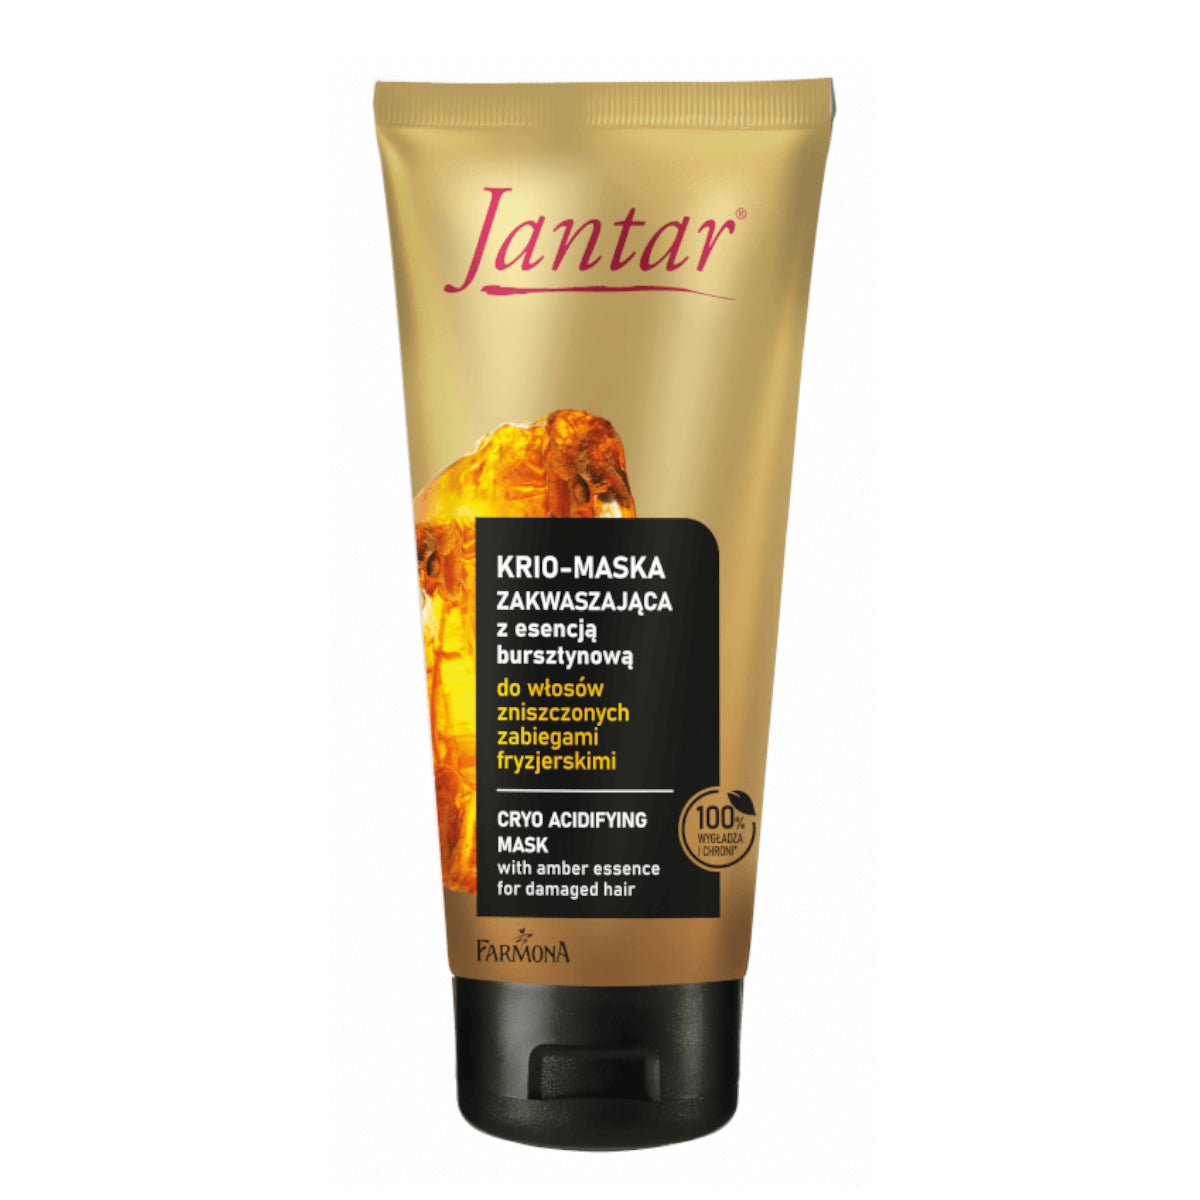 Farmona Jantar Cryo Acidifying Mask with Amber Extract Damaged Hair